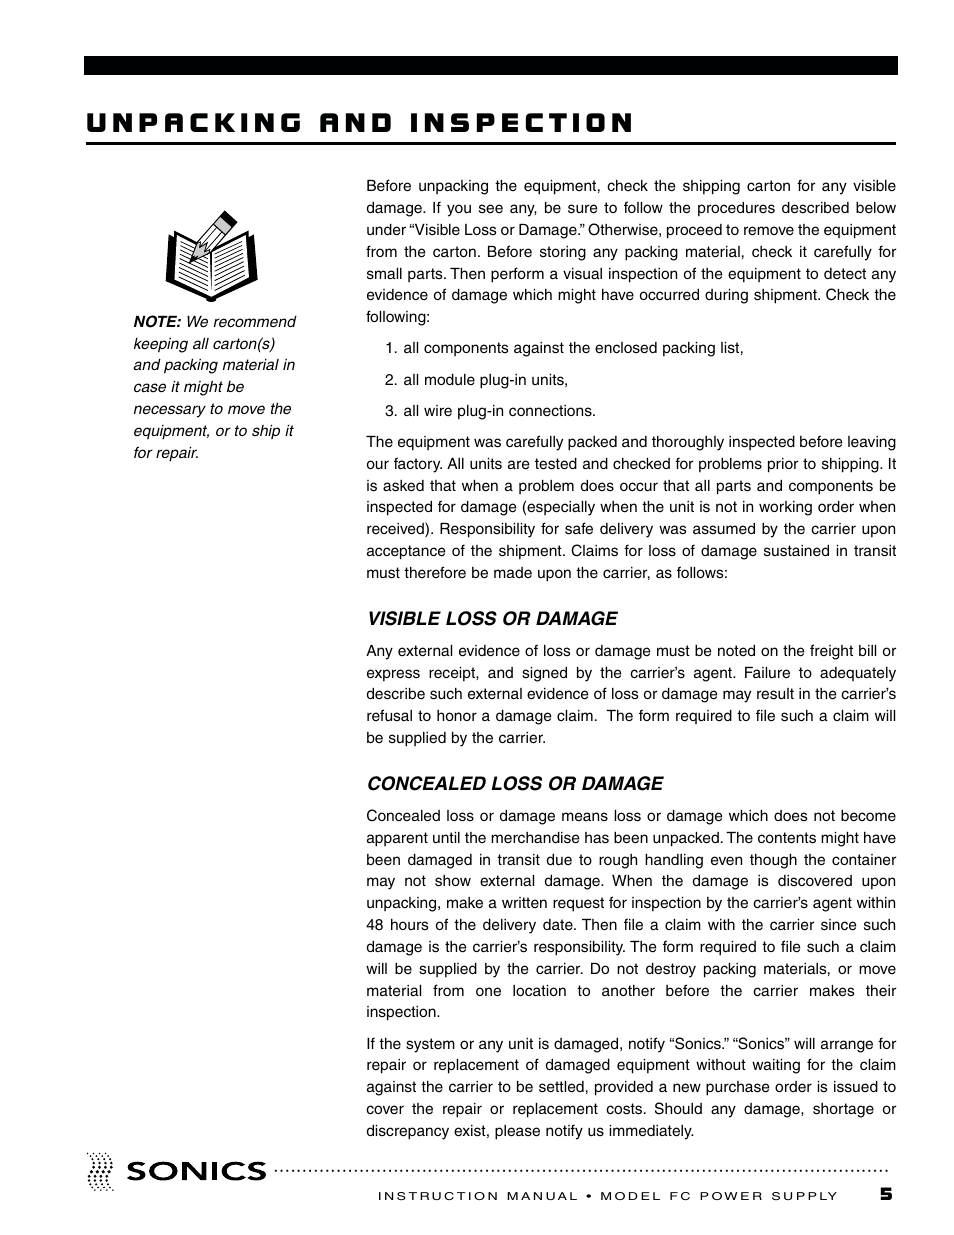 Sonics FC User Manual | Page 6 / 24